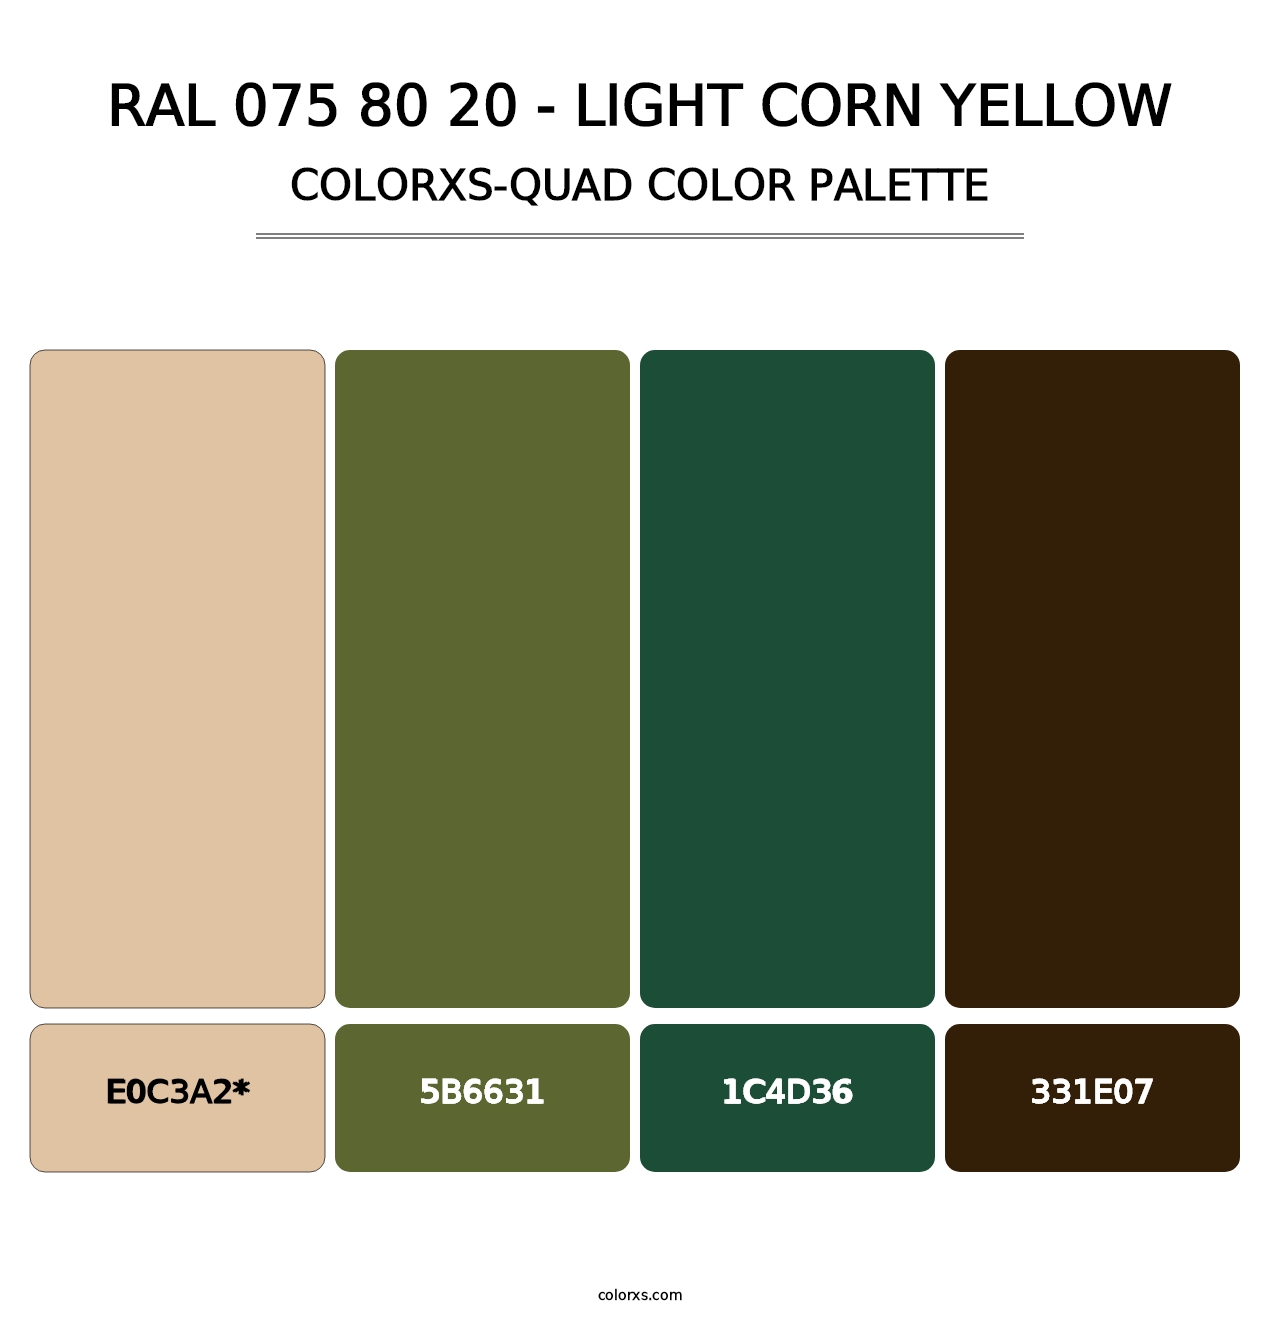 RAL 075 80 20 - Light Corn Yellow - Colorxs Quad Palette